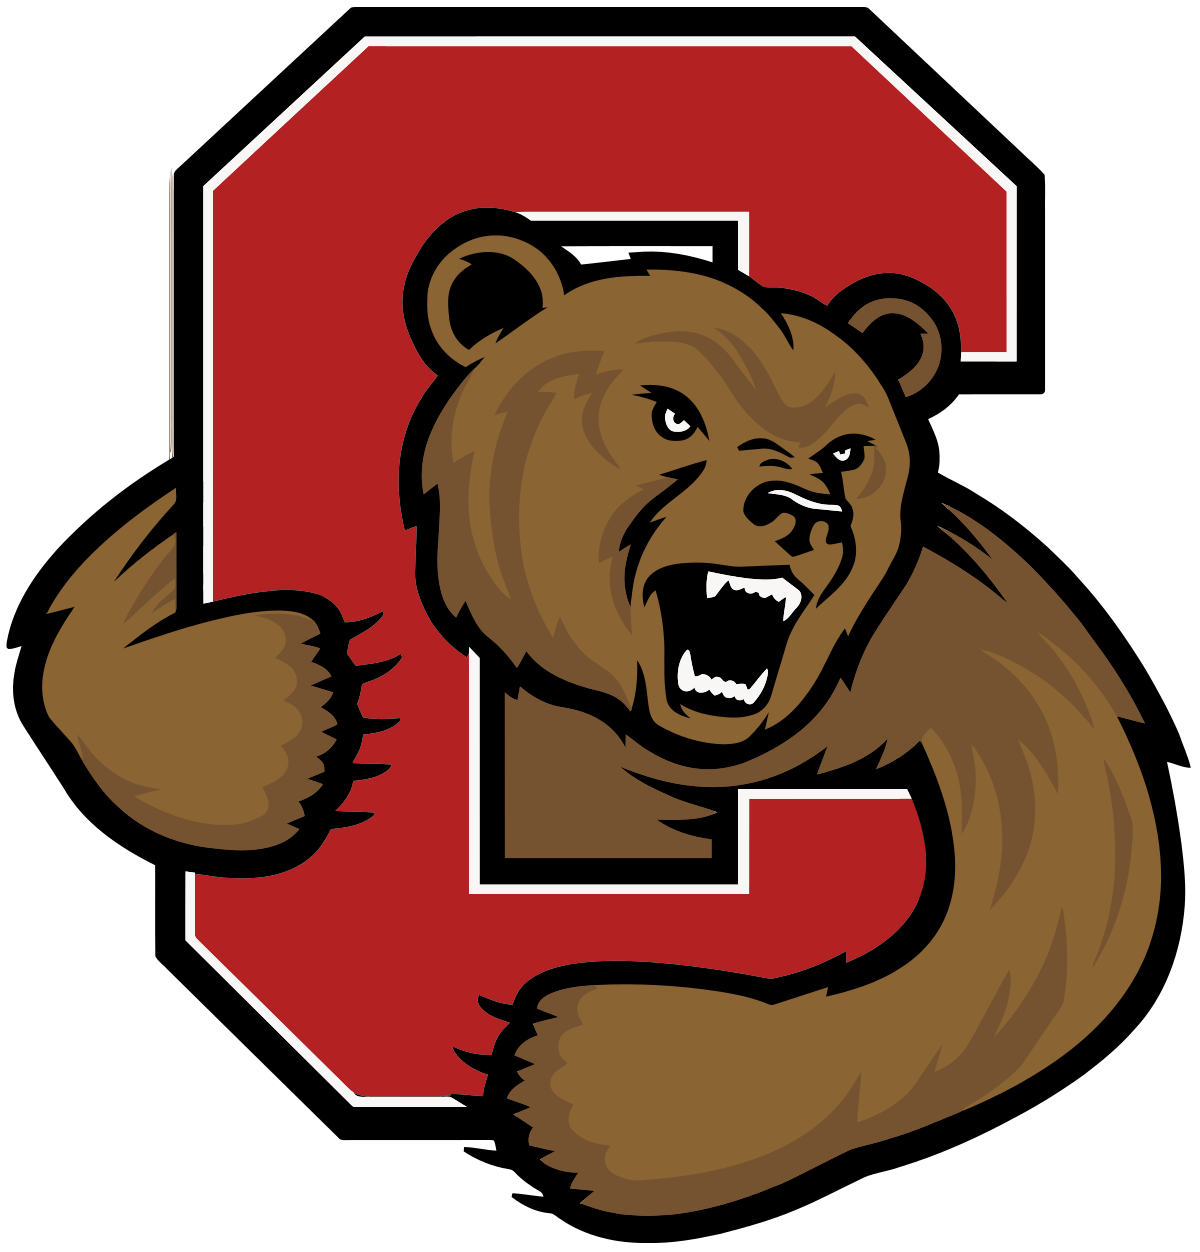 Big Red Cornell University Logo - Cornell Big Red men's ice hockey